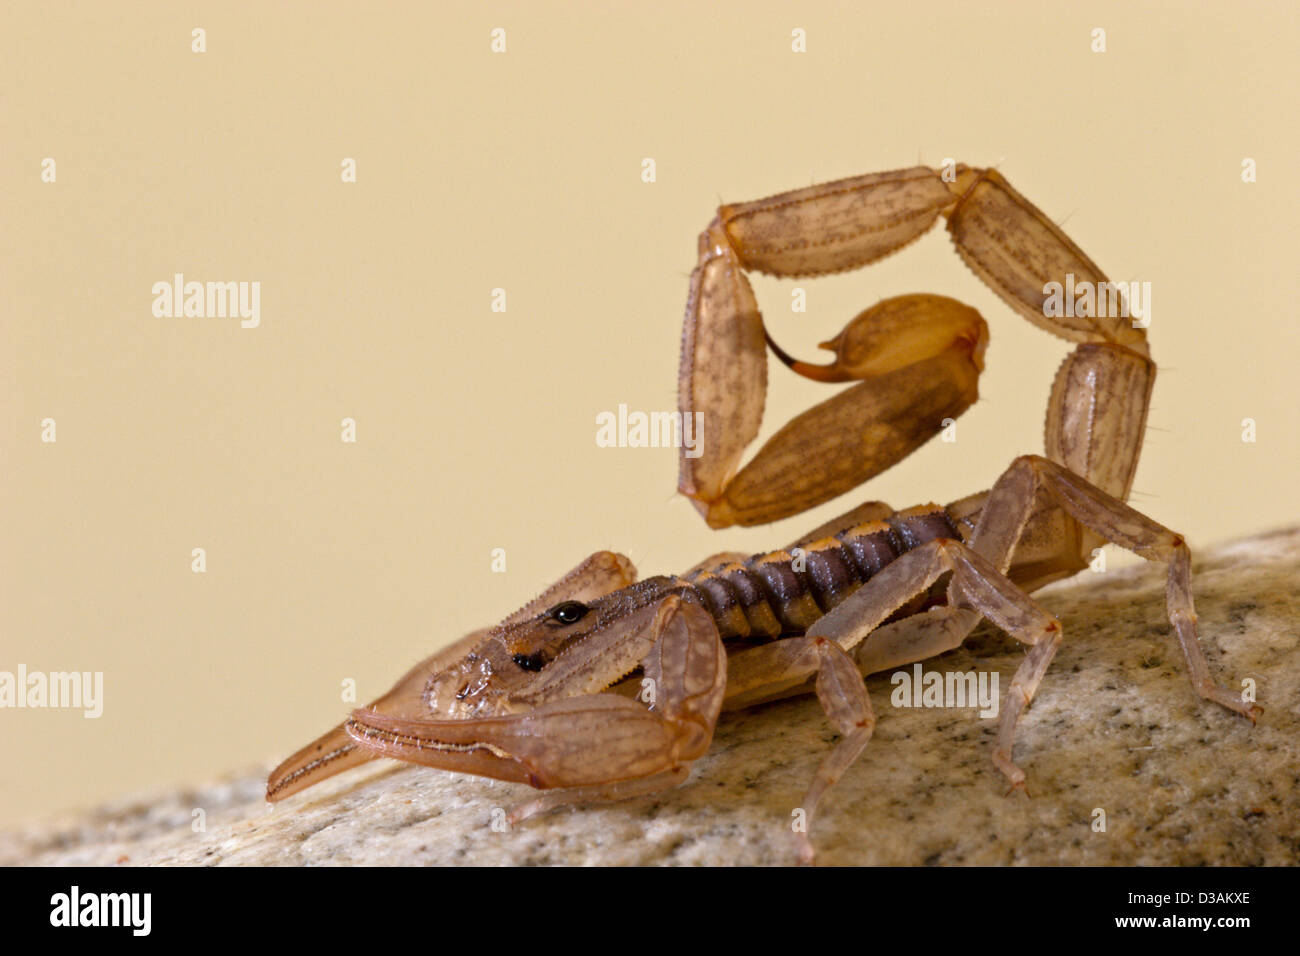 venomous scorpion Mexico desert Stock Photo